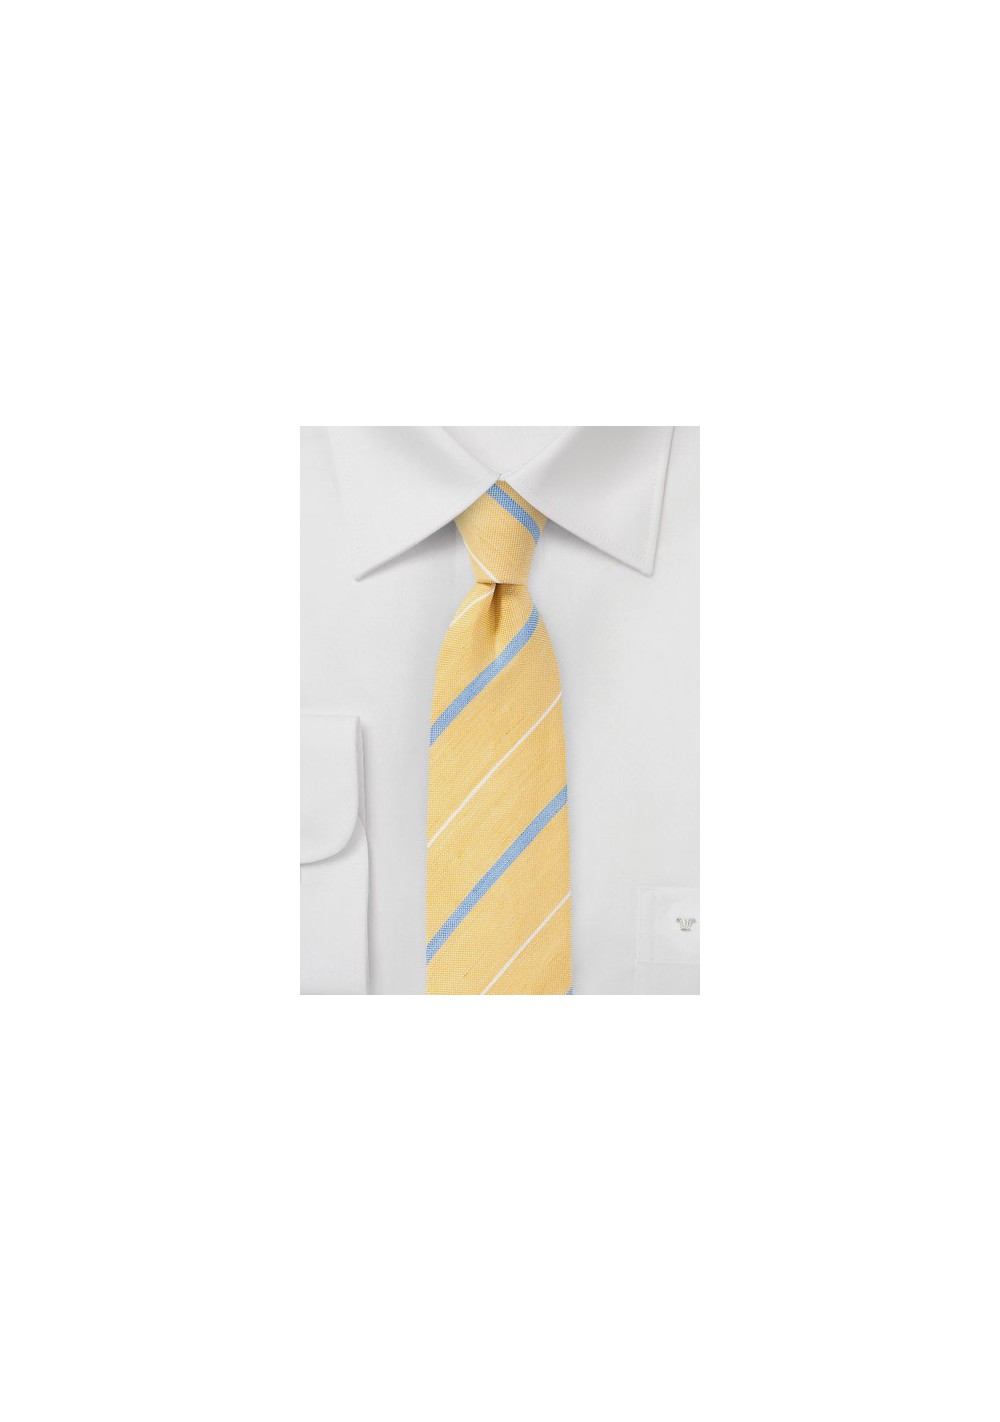 Striped Skinny Tie in Soft Yellow